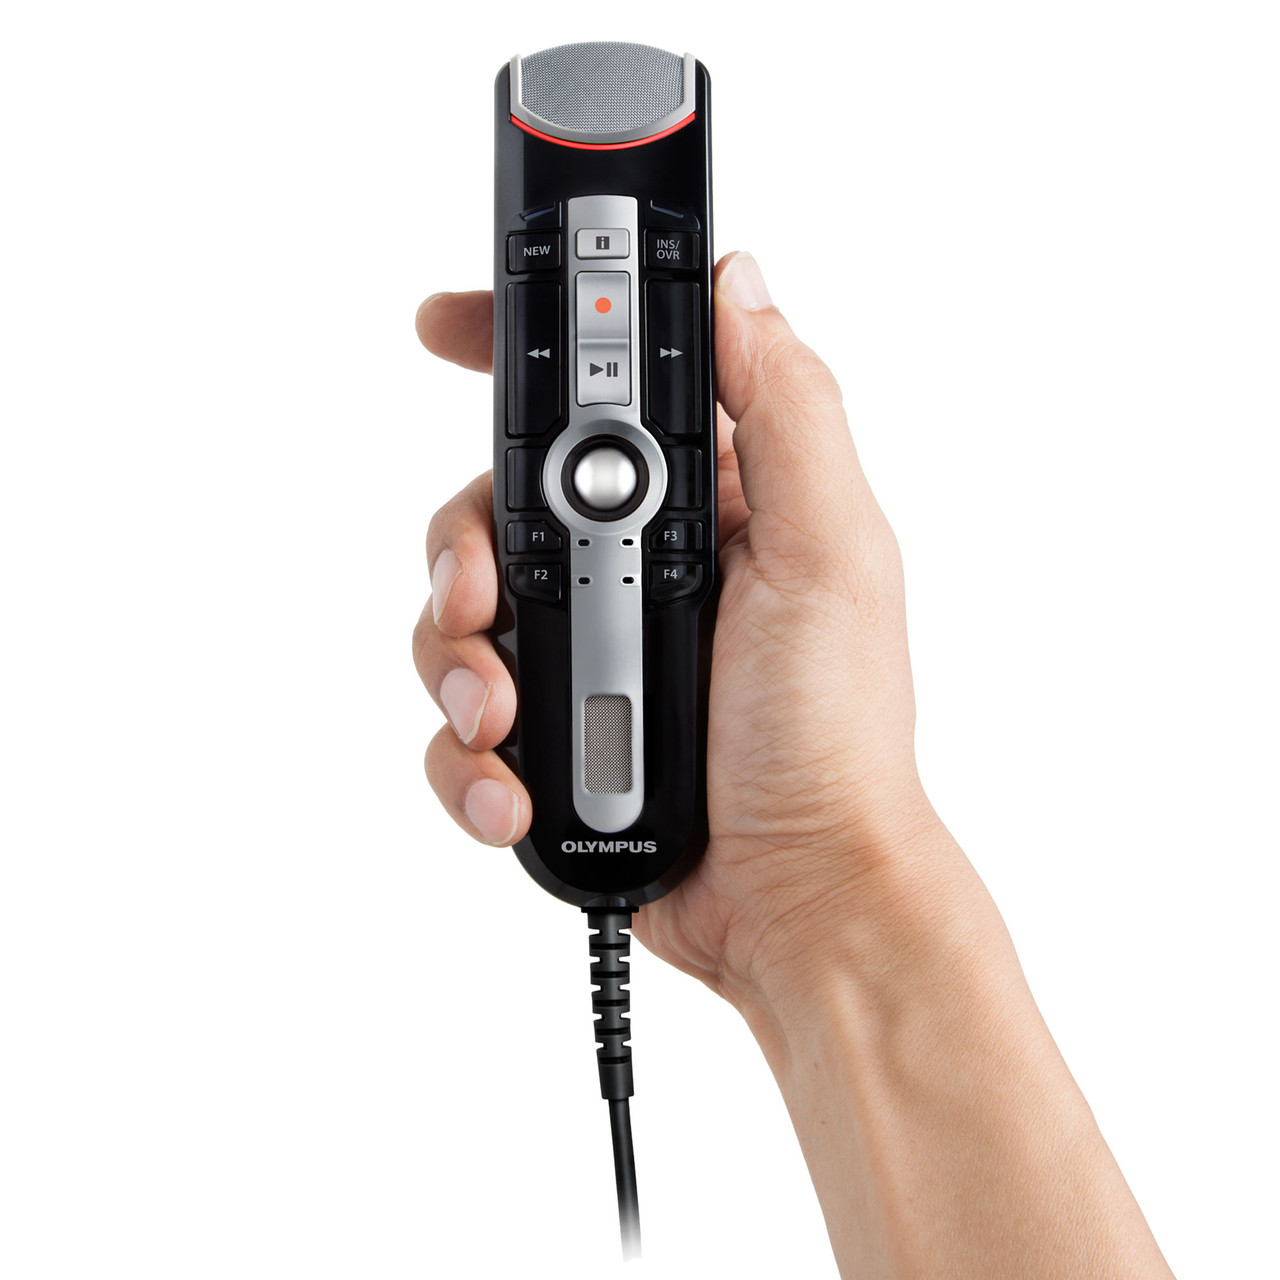 Leonardoda spil Arrangement Olympus RM-4010P | USB mikrofon til hospitaler